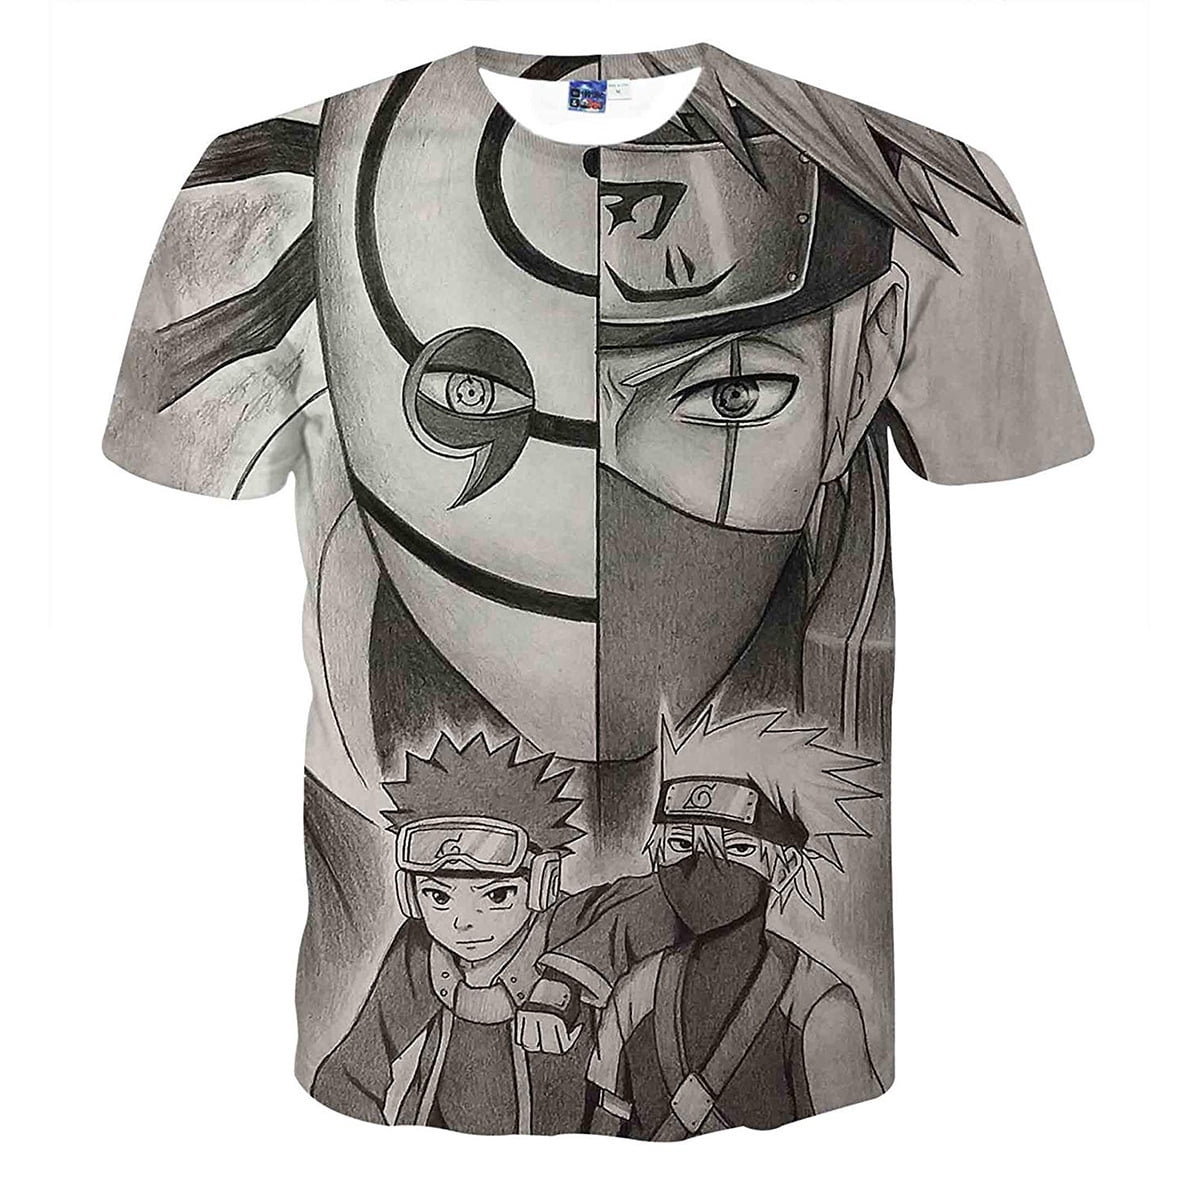 Fashion Cartoon Naruto T-Shirt Anime 3D Printed Uchiha Graphic Cosplay Tee